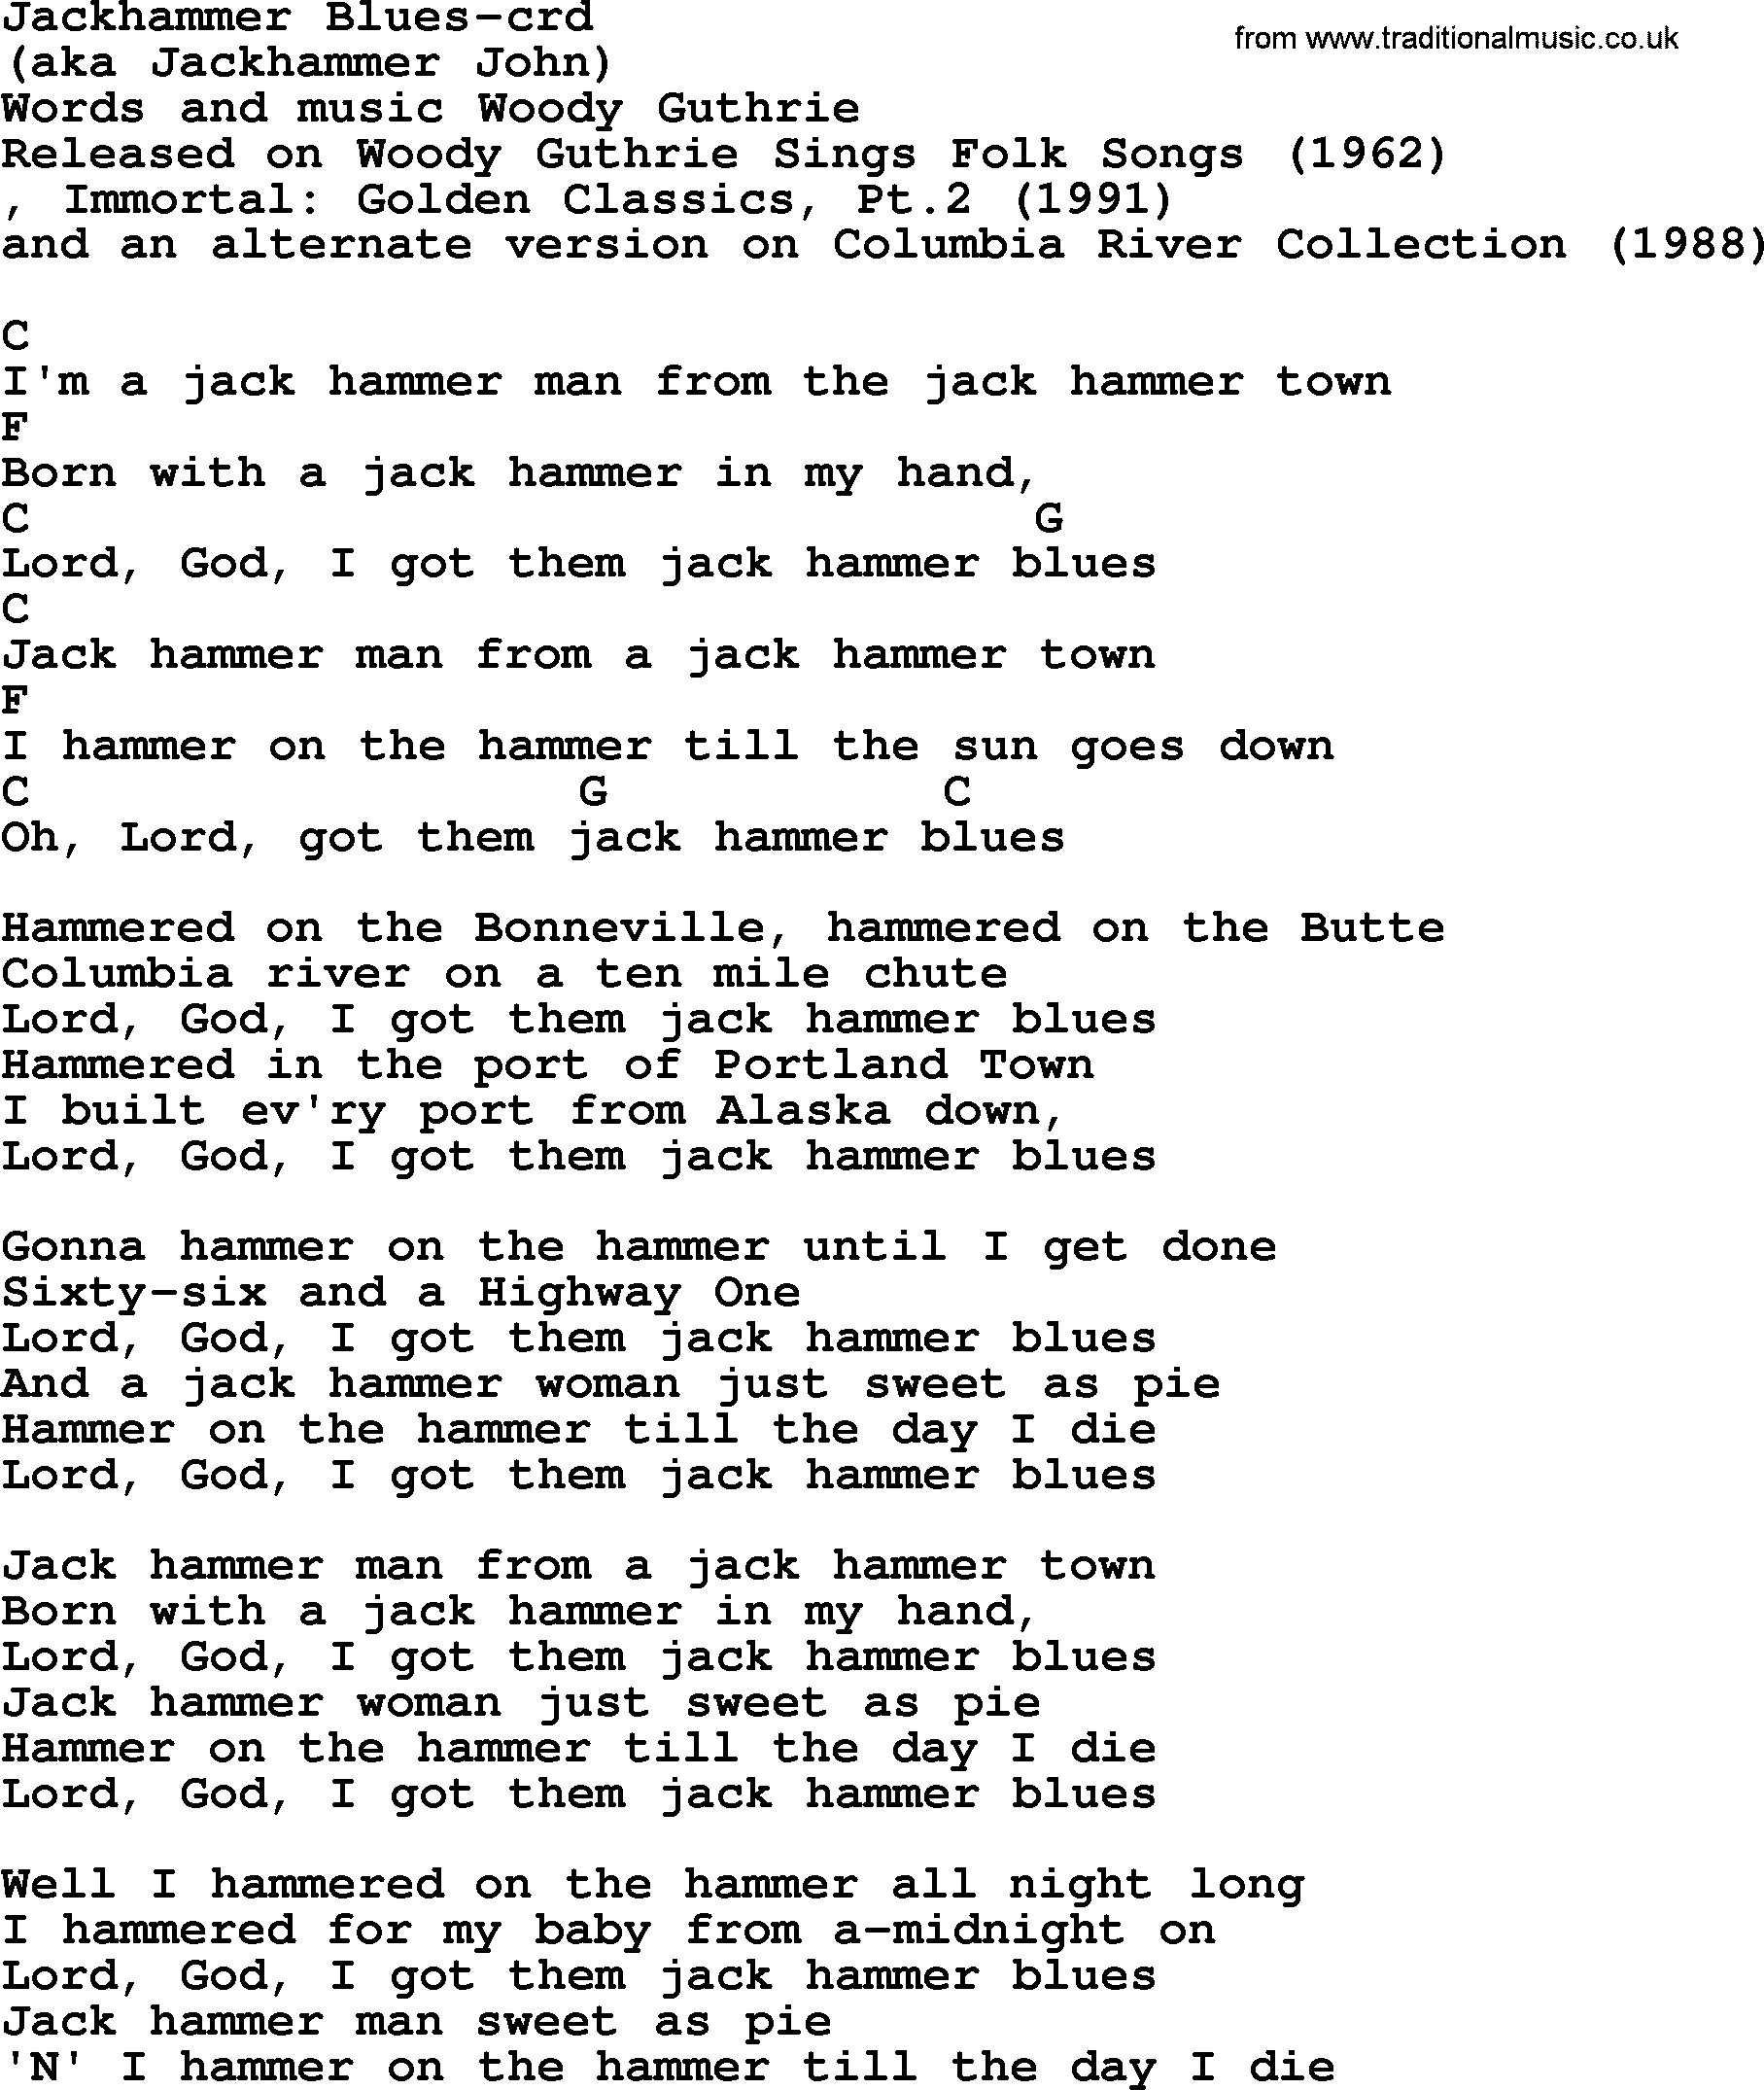 Woody Guthrie song Jackhammer Blues lyrics and chords